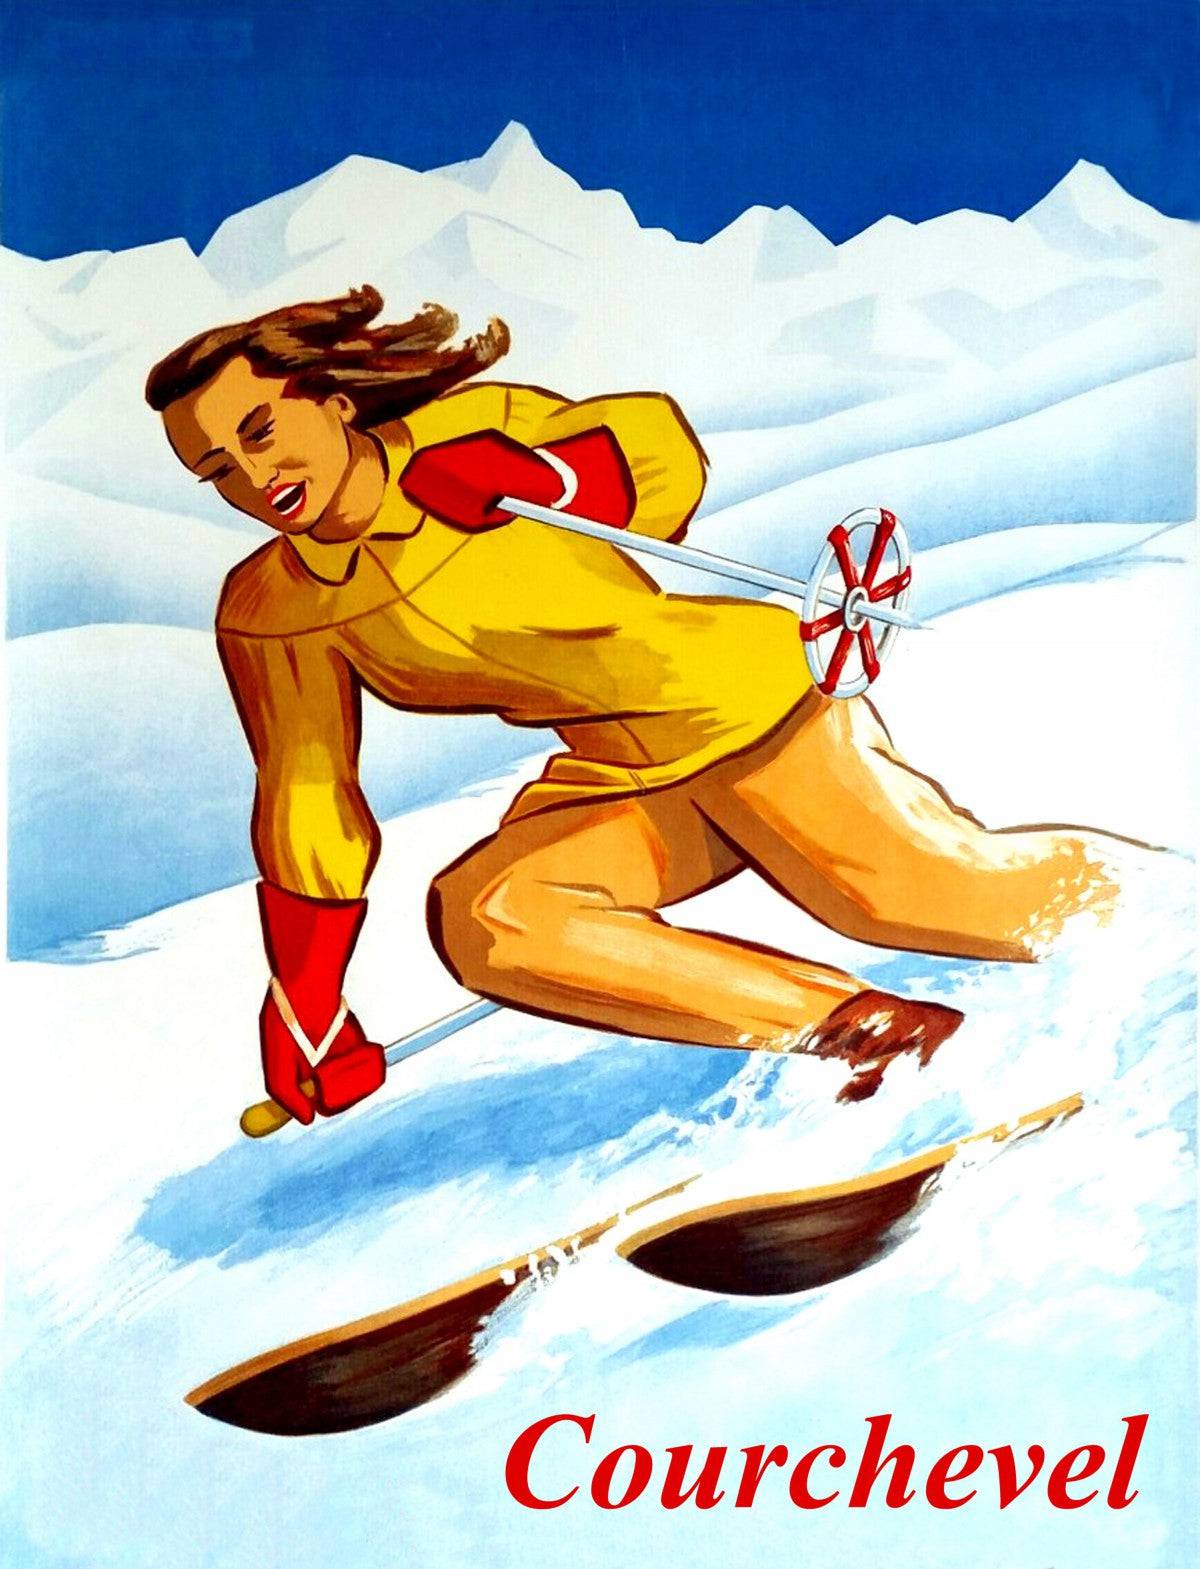 Skiing in Courchevel - Powderaddicts